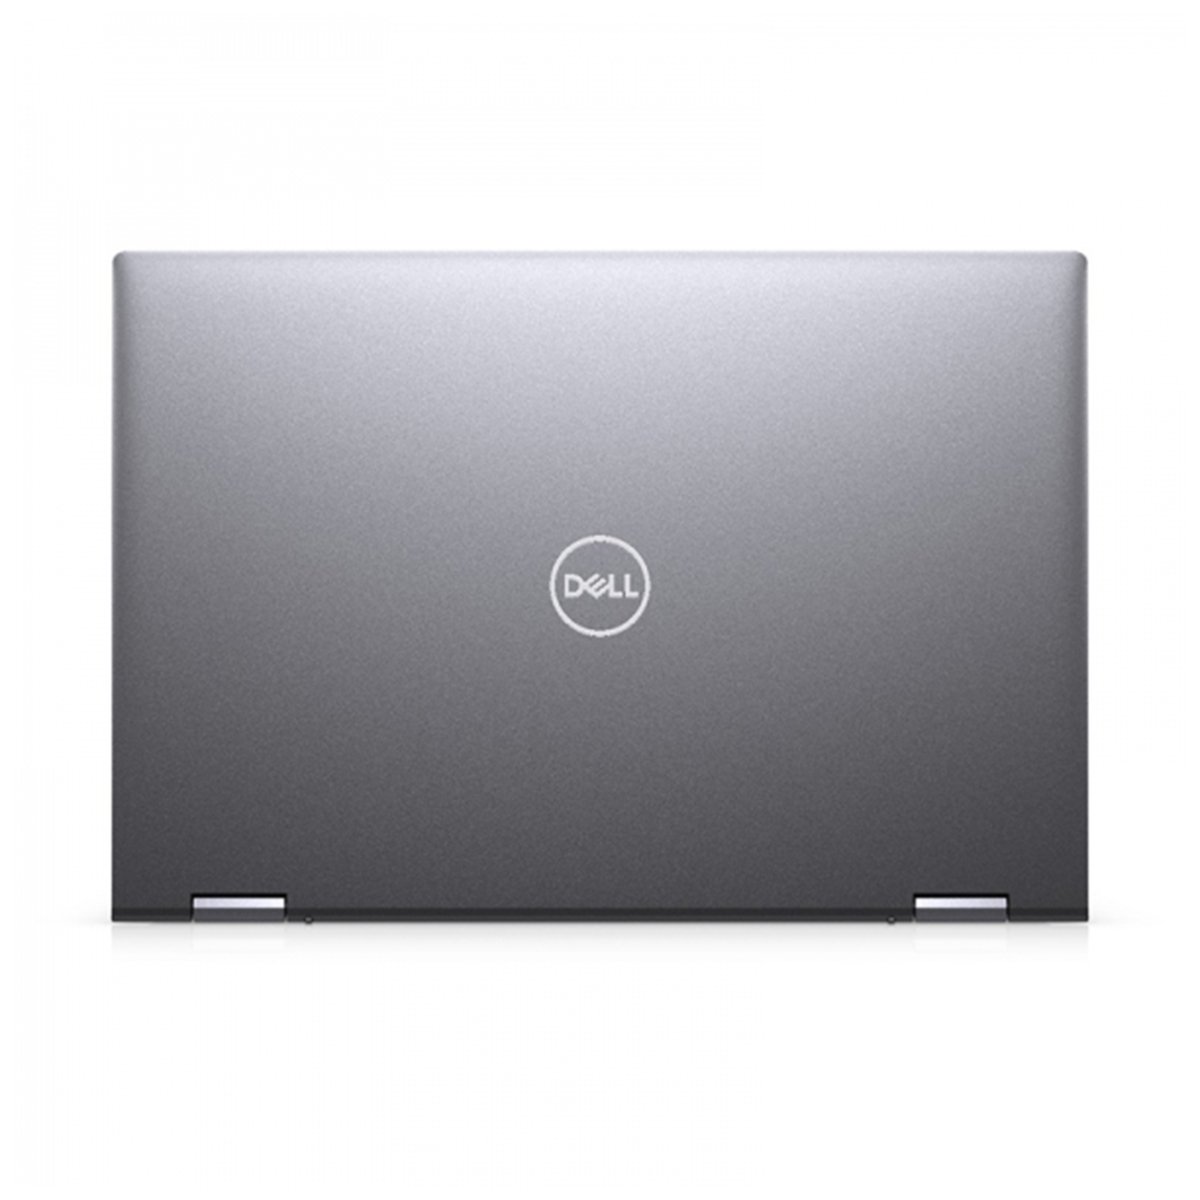 Dell 5406-INS-K0345 Convertible 2 in 1 Laptop, 11th Gen Intel Core i7, 14 inches, 16GB, 512GB, Titan Grey